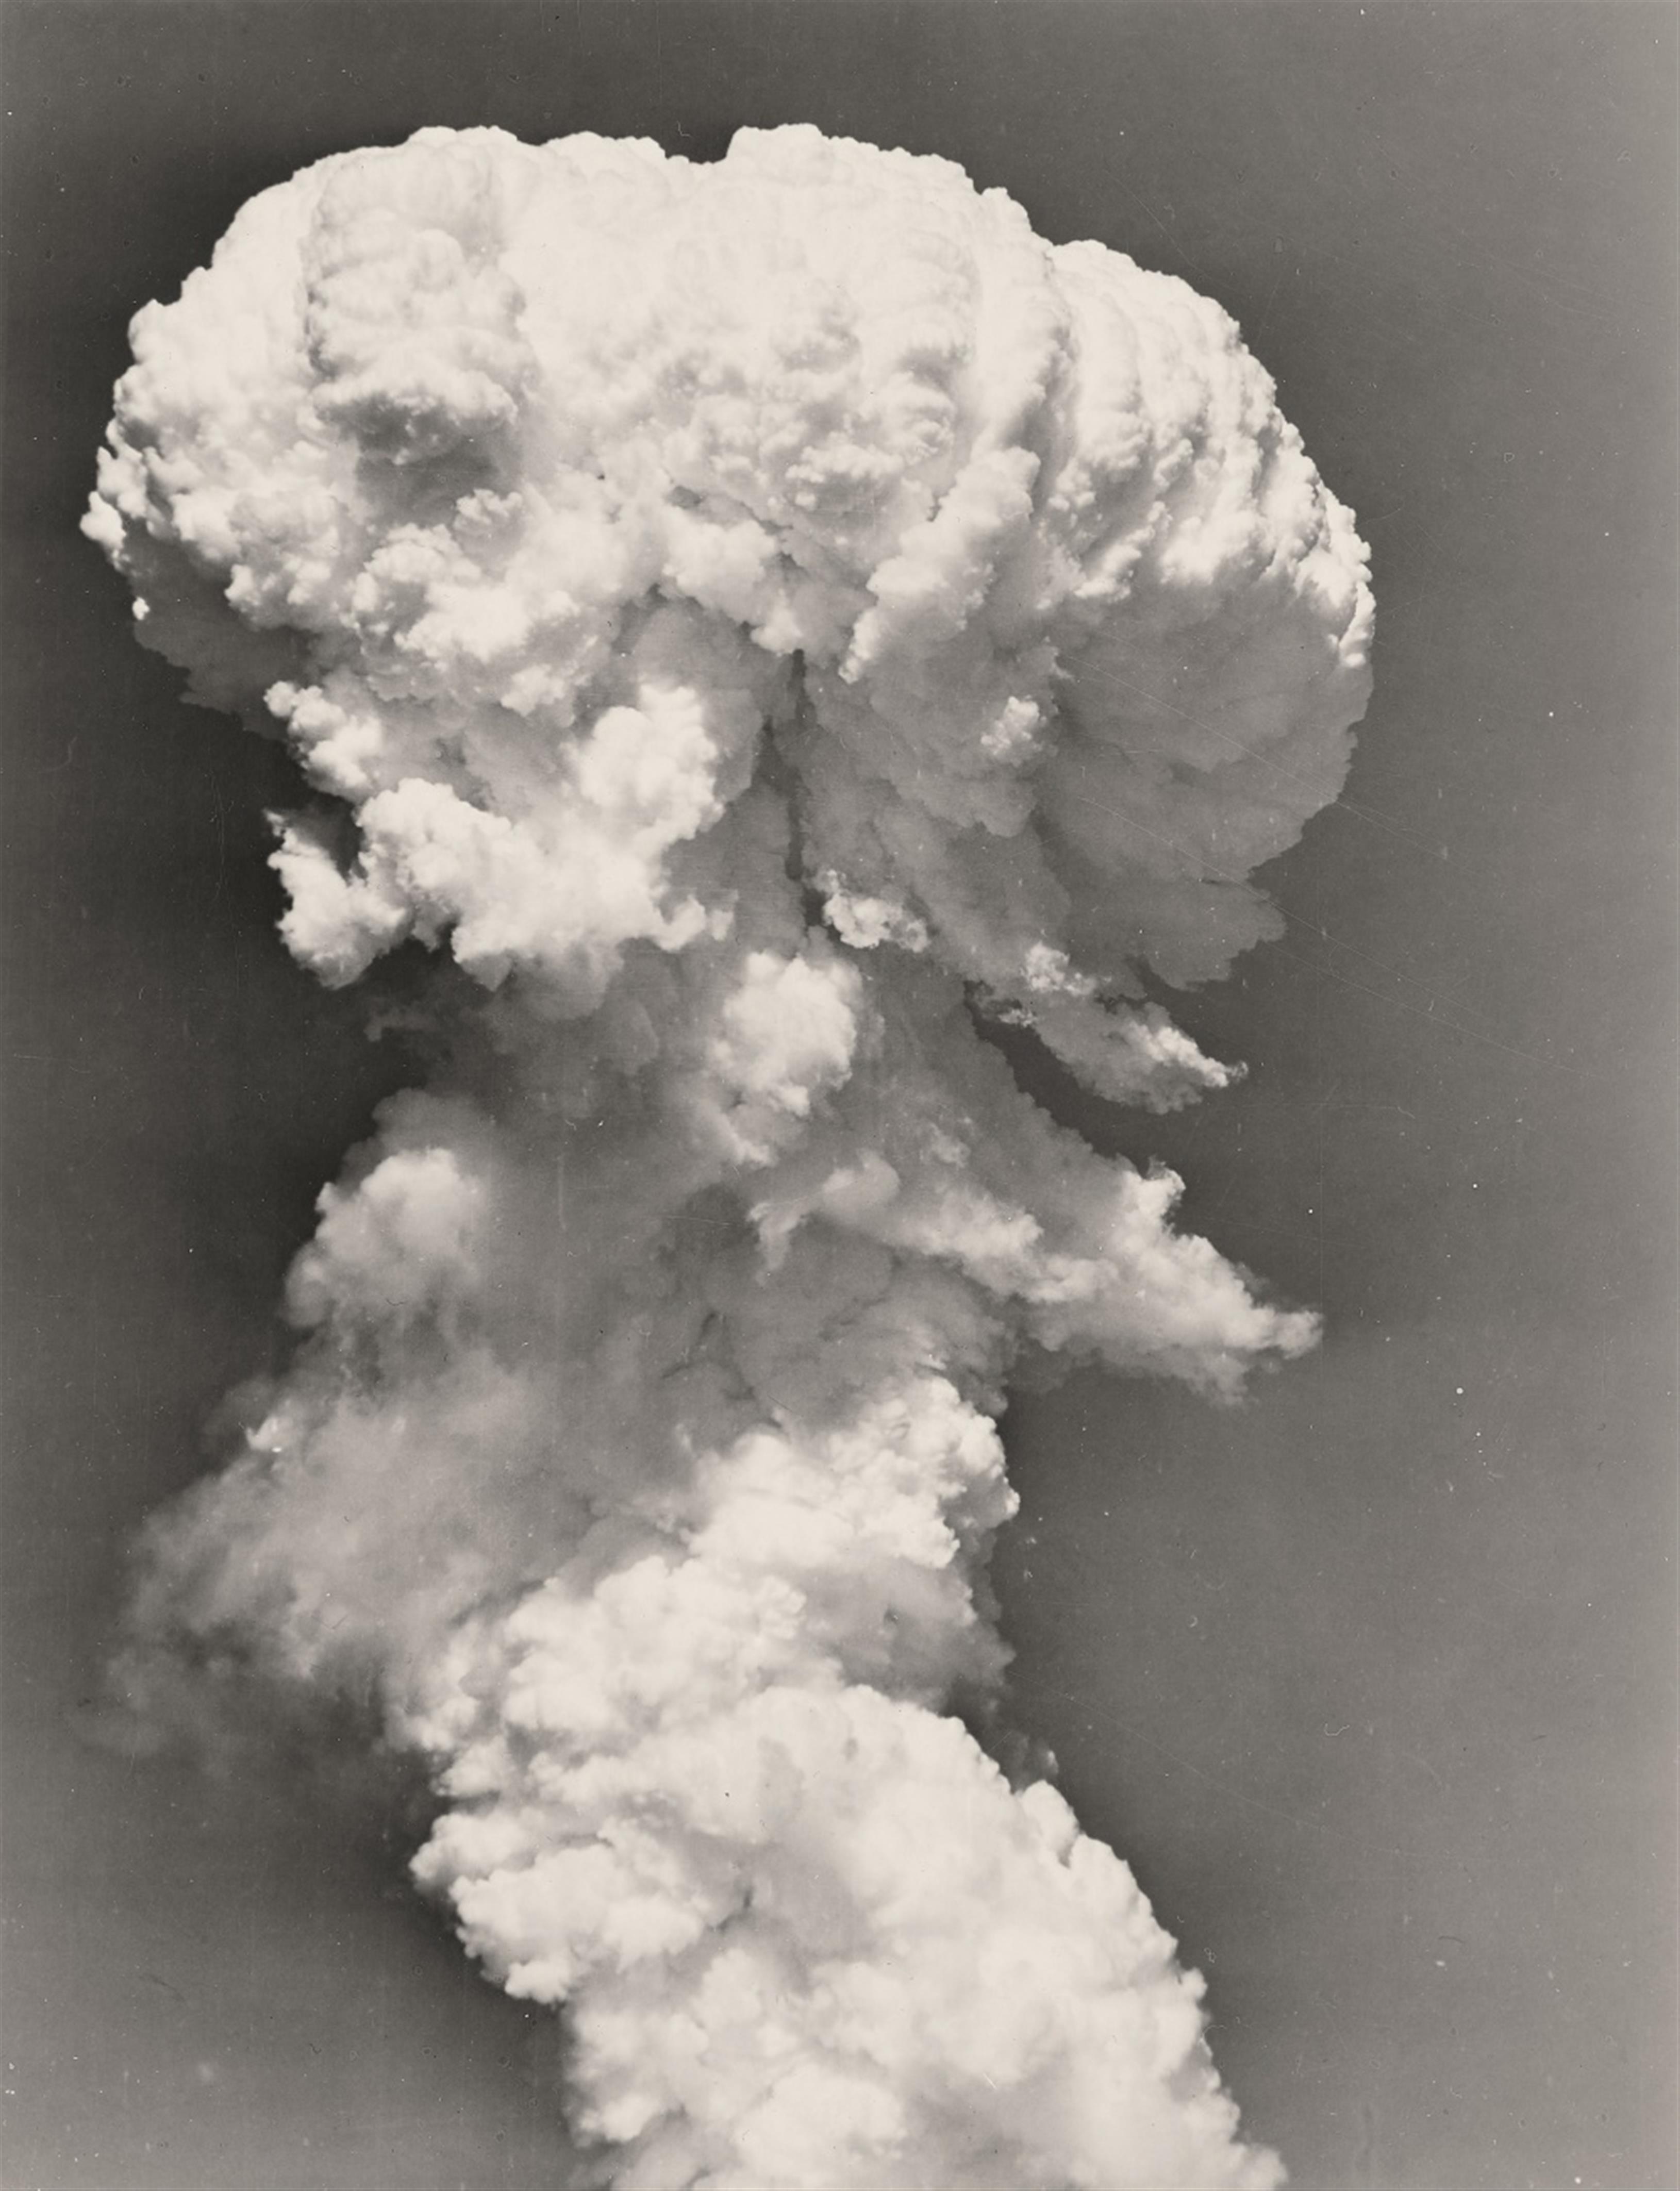 Joint Army Task Force One Photo - "Operation Crossroads" - Aufnahmen der Atombomben-Tests auf dem Bikini-Atoll - image-15